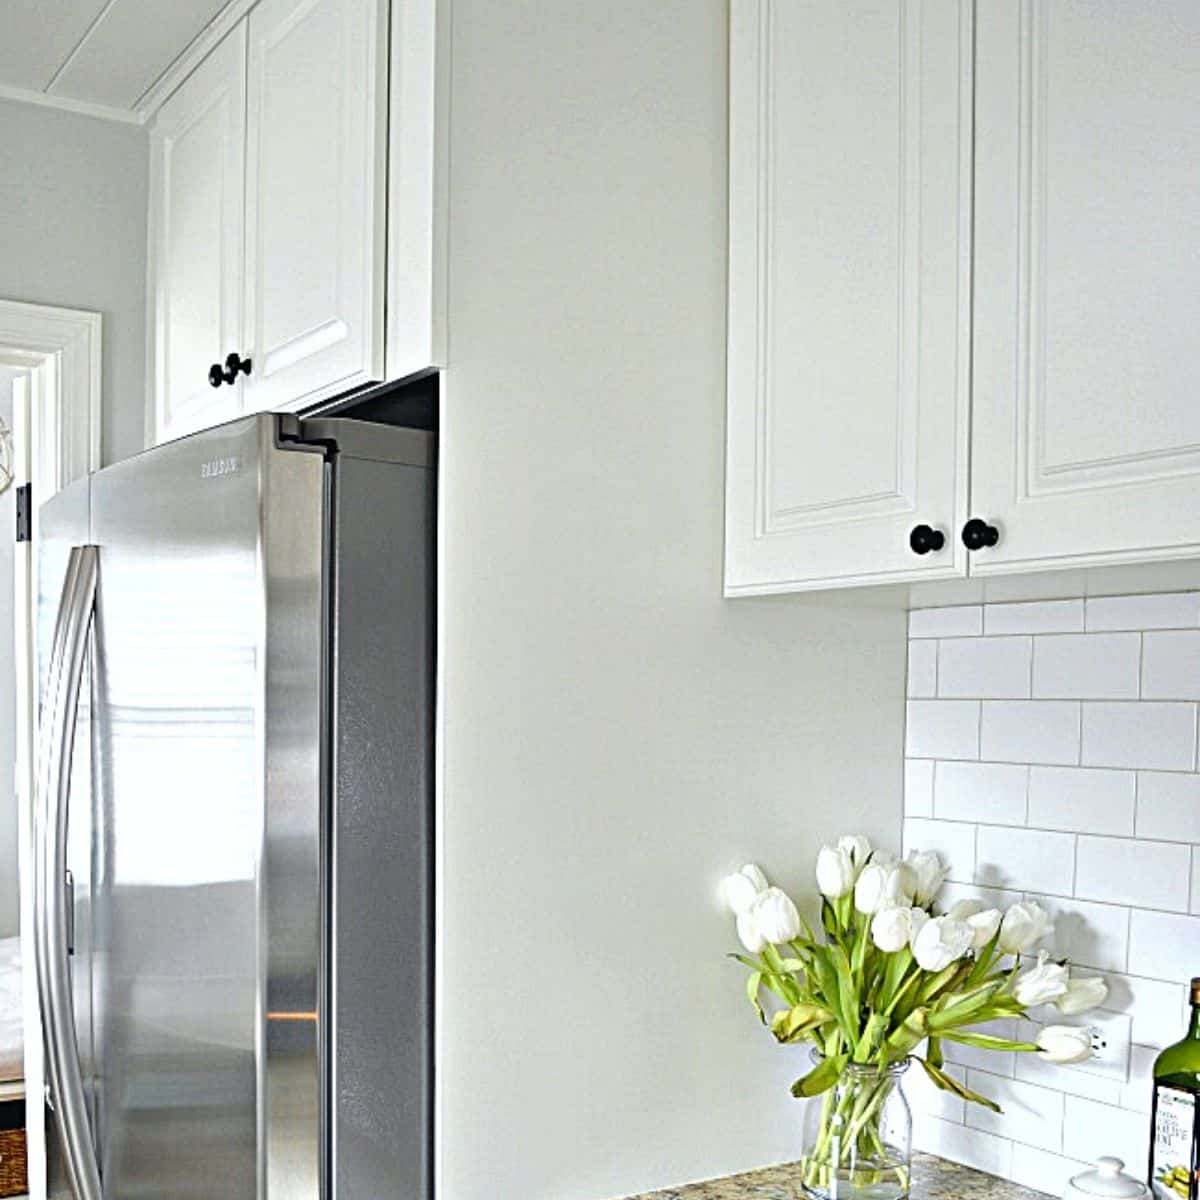 How to Build a DIY Refrigerator Cabinet